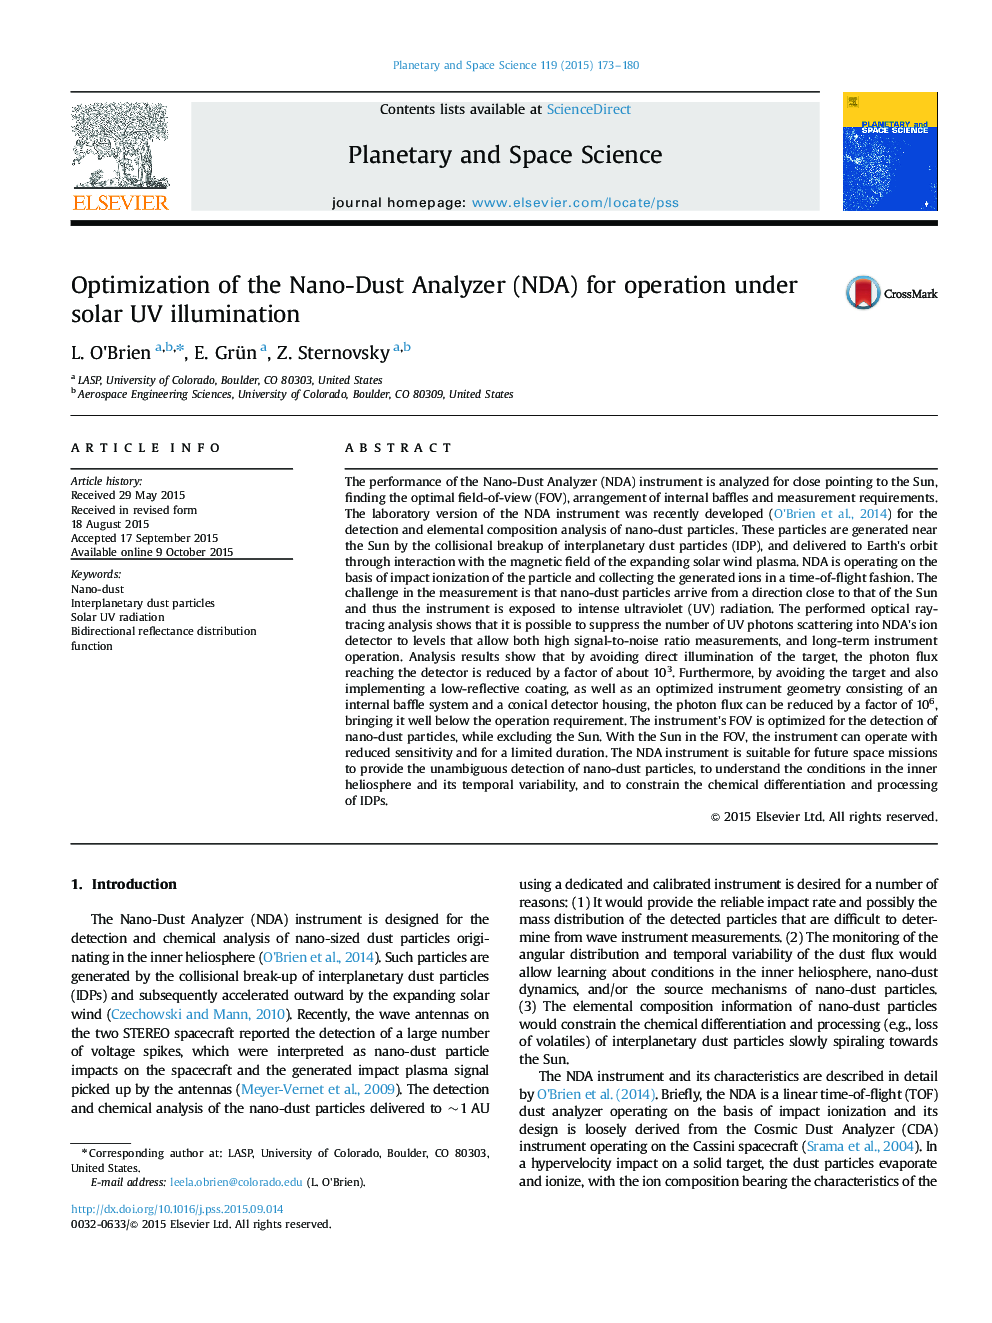 Optimization of the Nano-Dust Analyzer (NDA) for operation under solar UV illumination